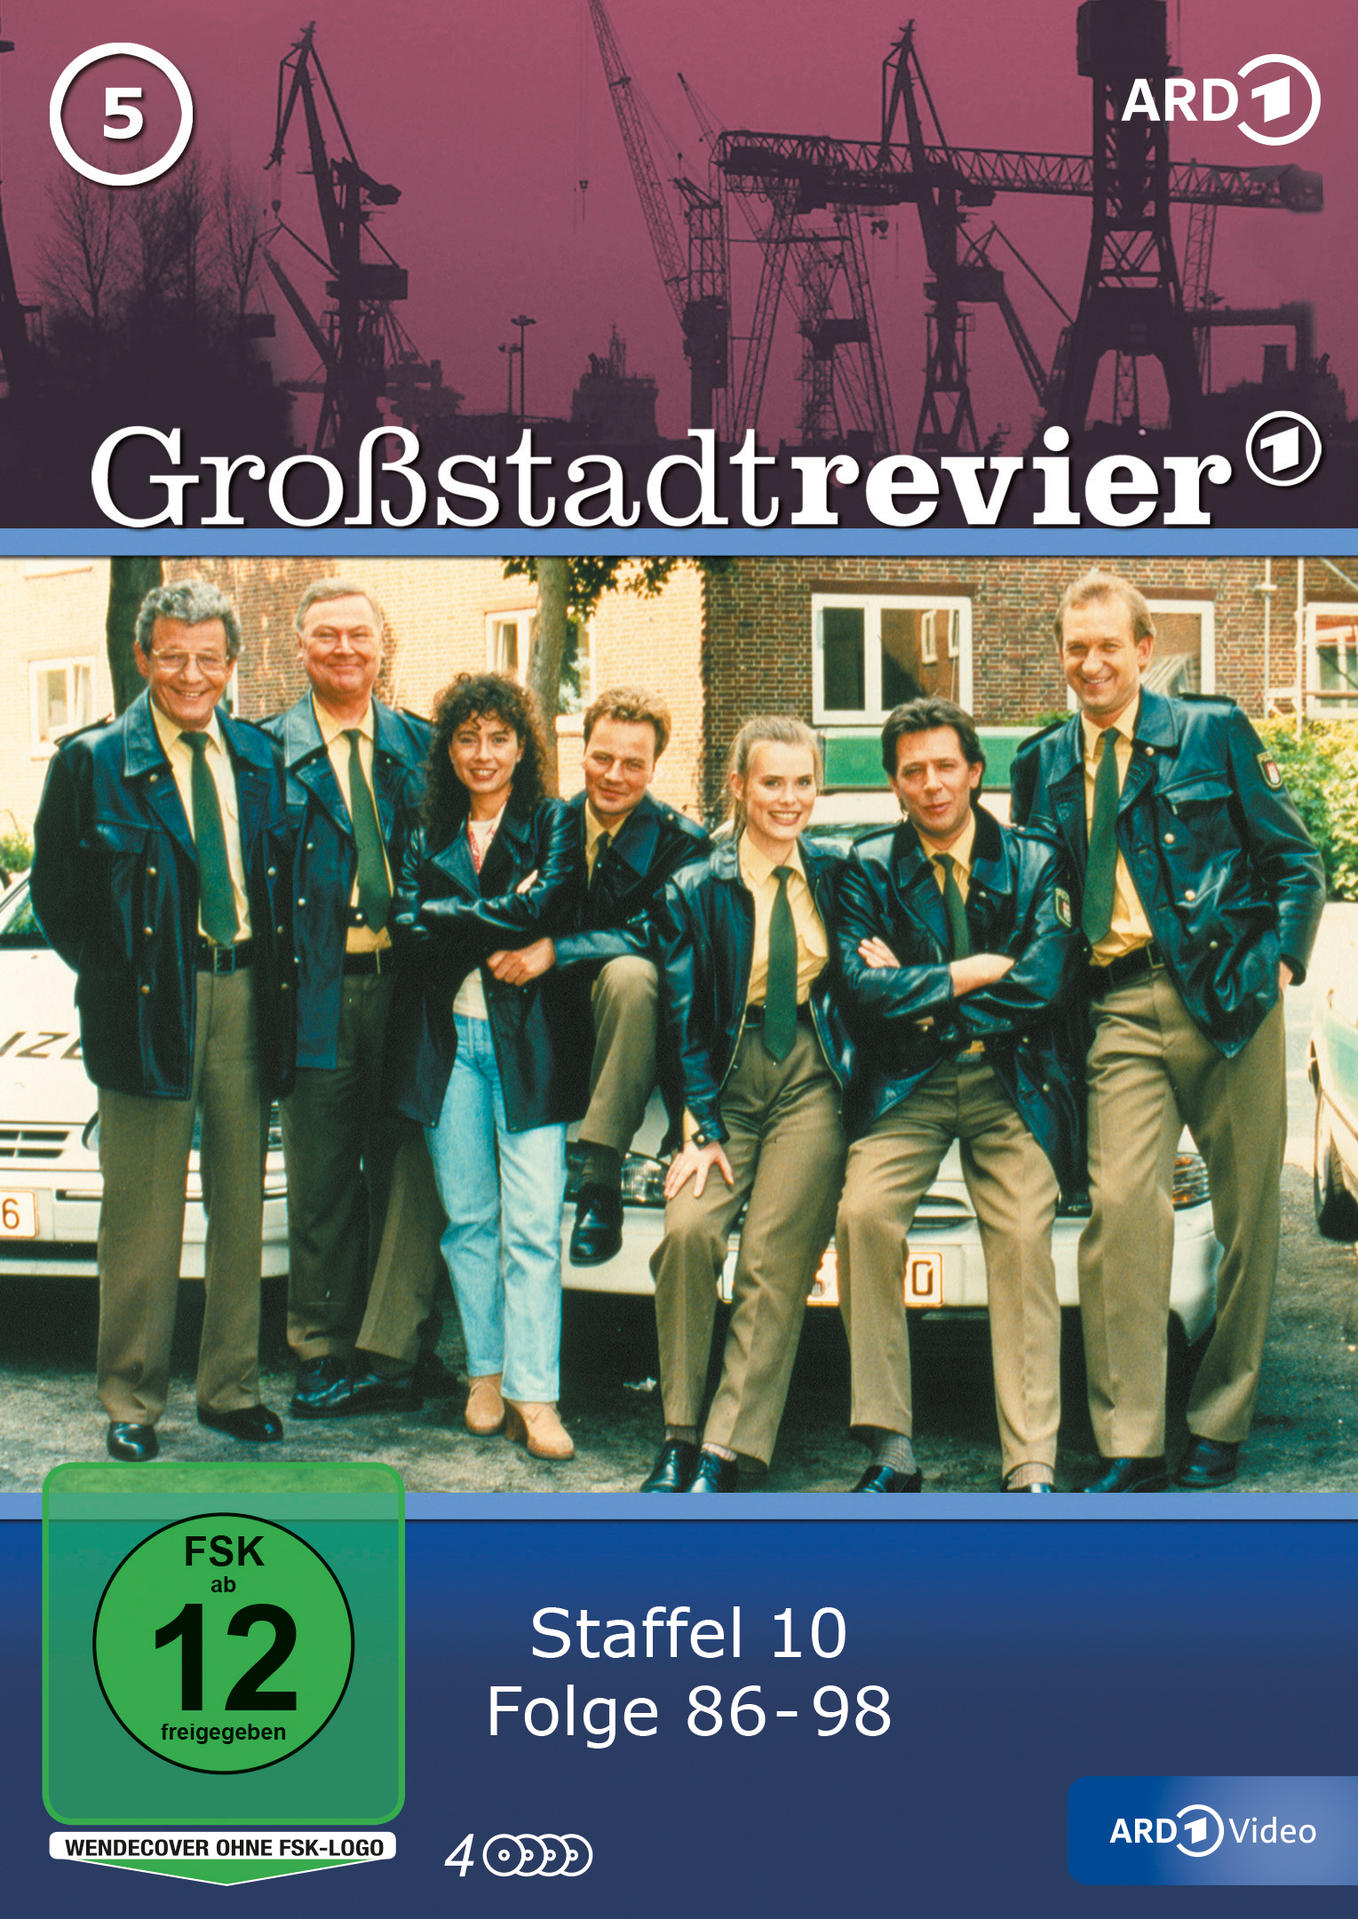 05 86-98) DVD (Folge Großstadtrevier